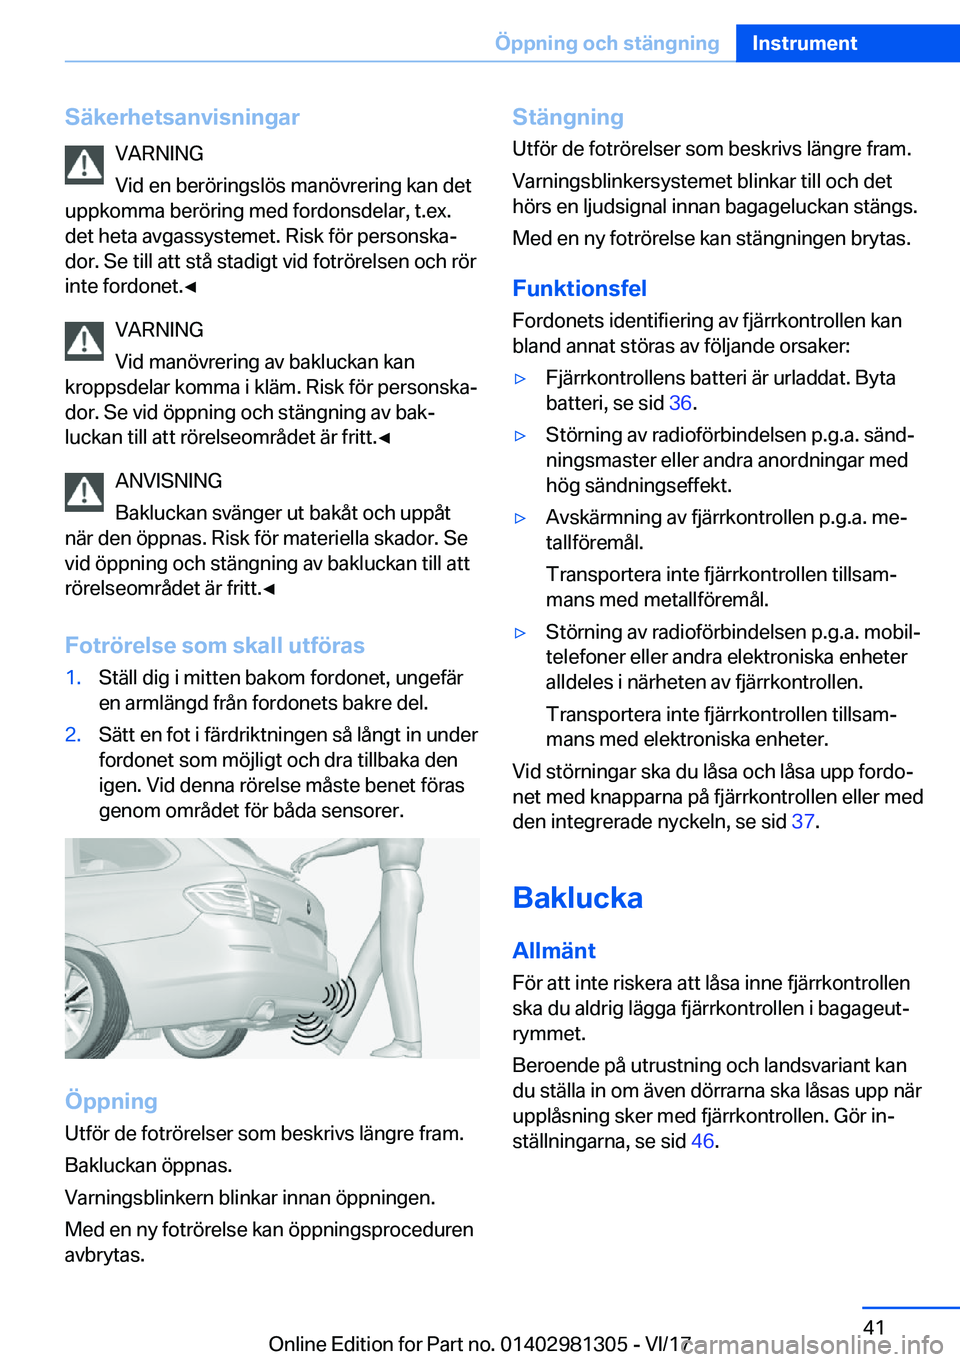 BMW X4 2018  InstruktionsbÖcker (in Swedish) �S�ä�k�e�r�h�e�t�s�a�n�v�i�s�n�i�n�g�a�r�V�A�R�N�I�N�G
�V�i�d� �e�n� �b�e�r�